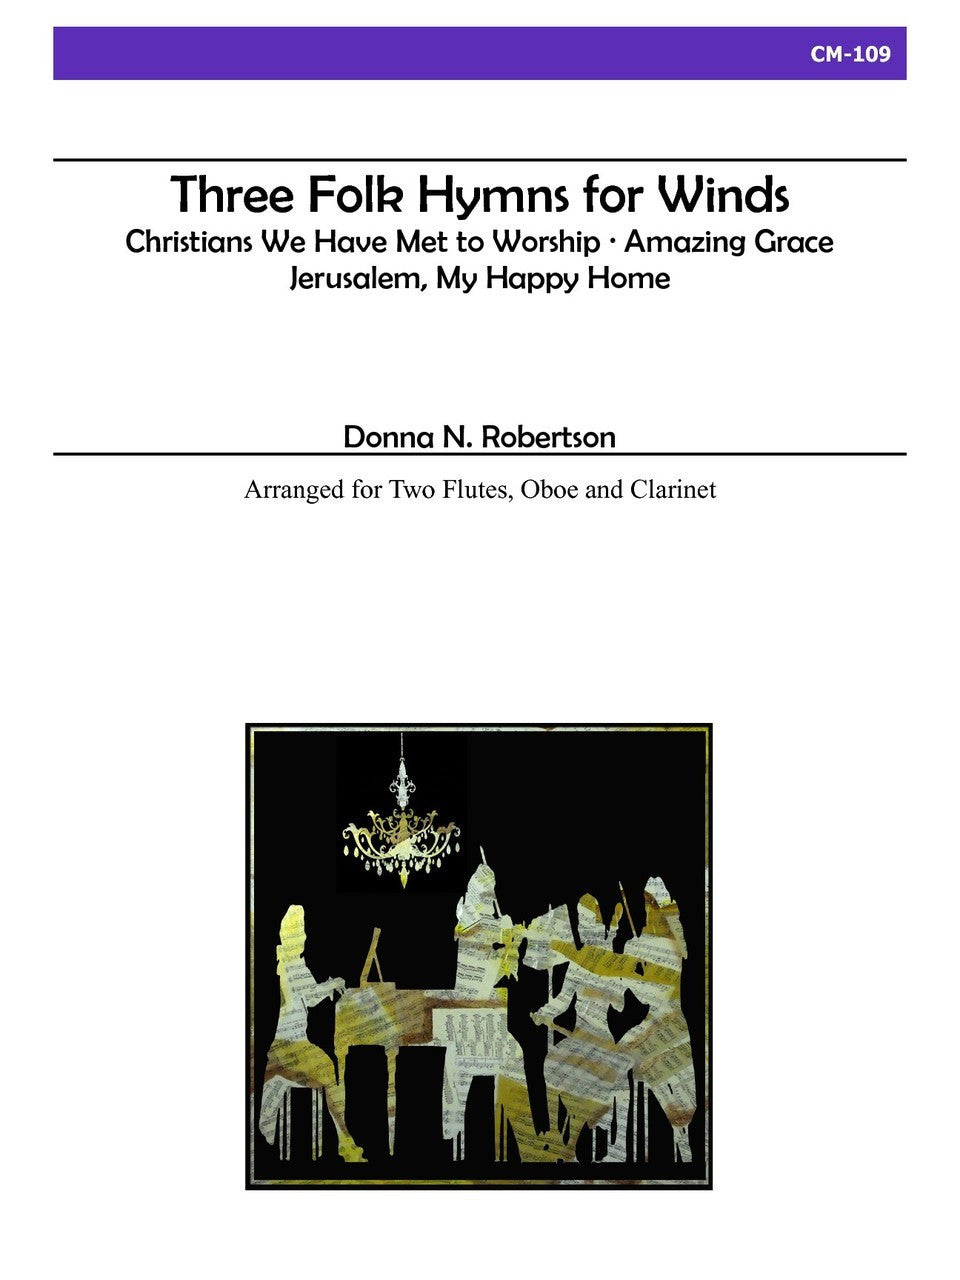 Robertson - Three Folk Hymns for Winds